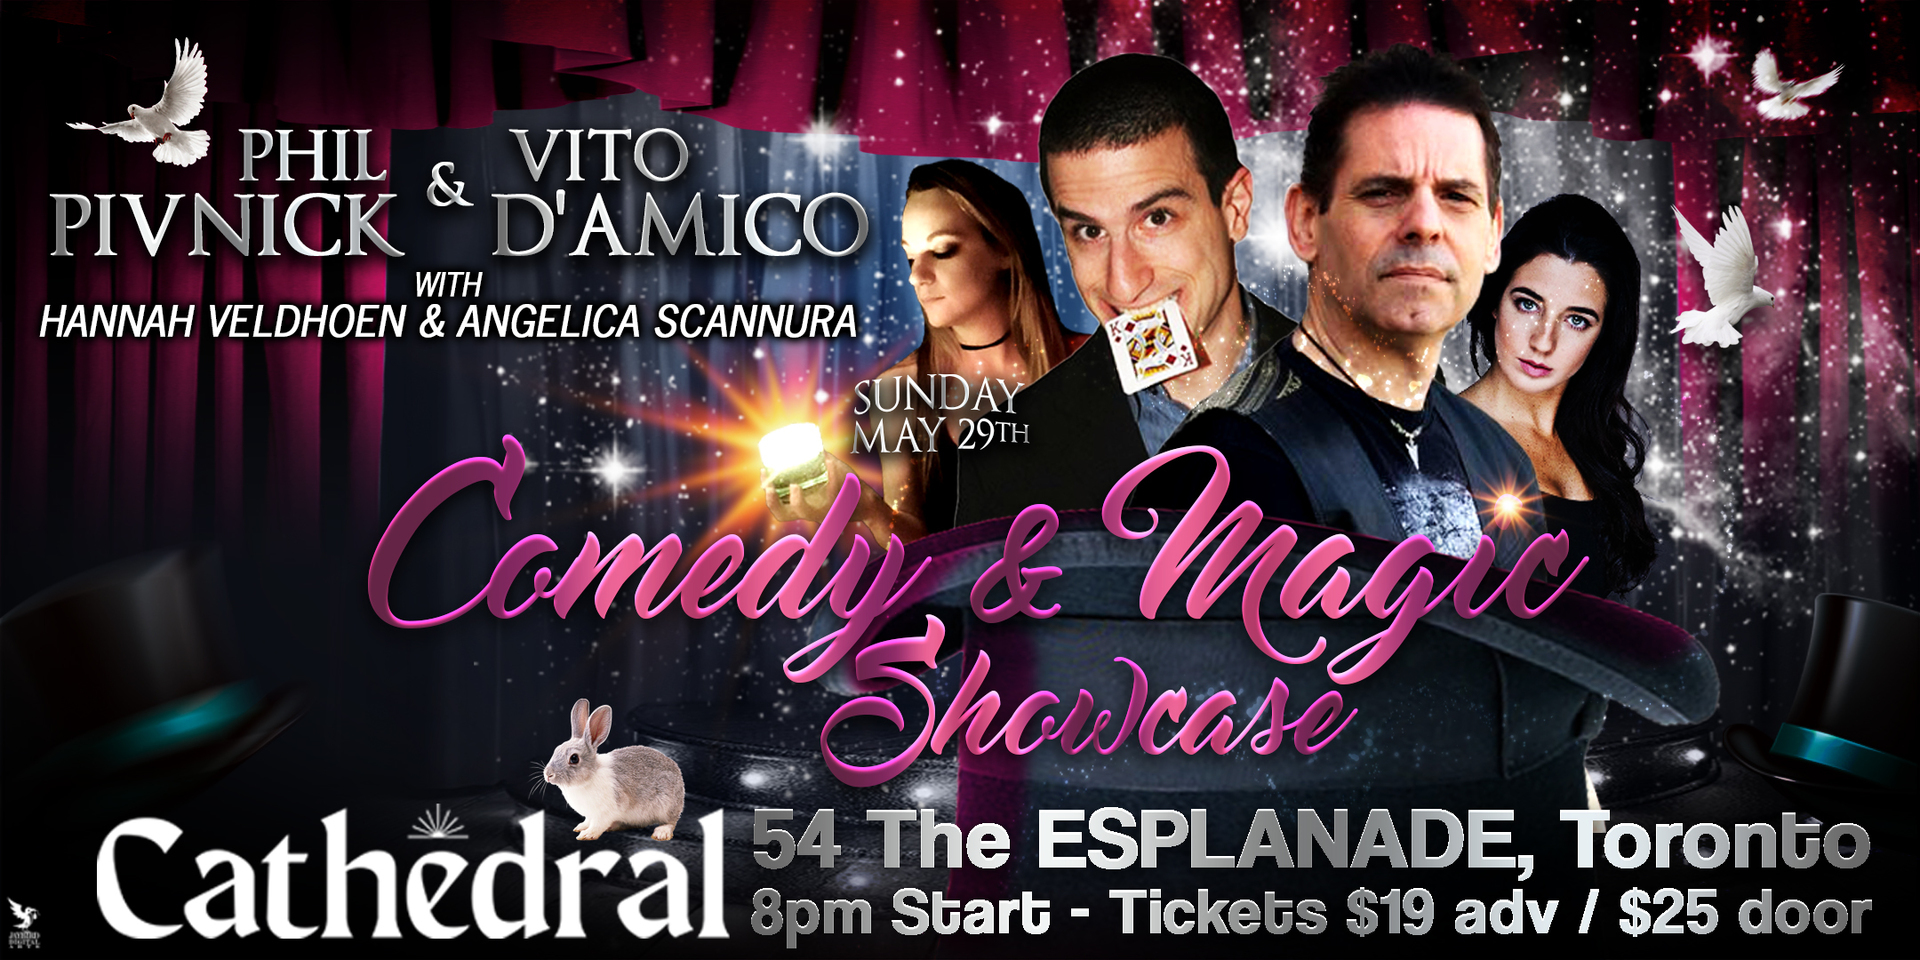 Comedy and Magic Showcase - Featuring Phil Pivnick and Vito D'Amico, Toronto, Ontario, Canada